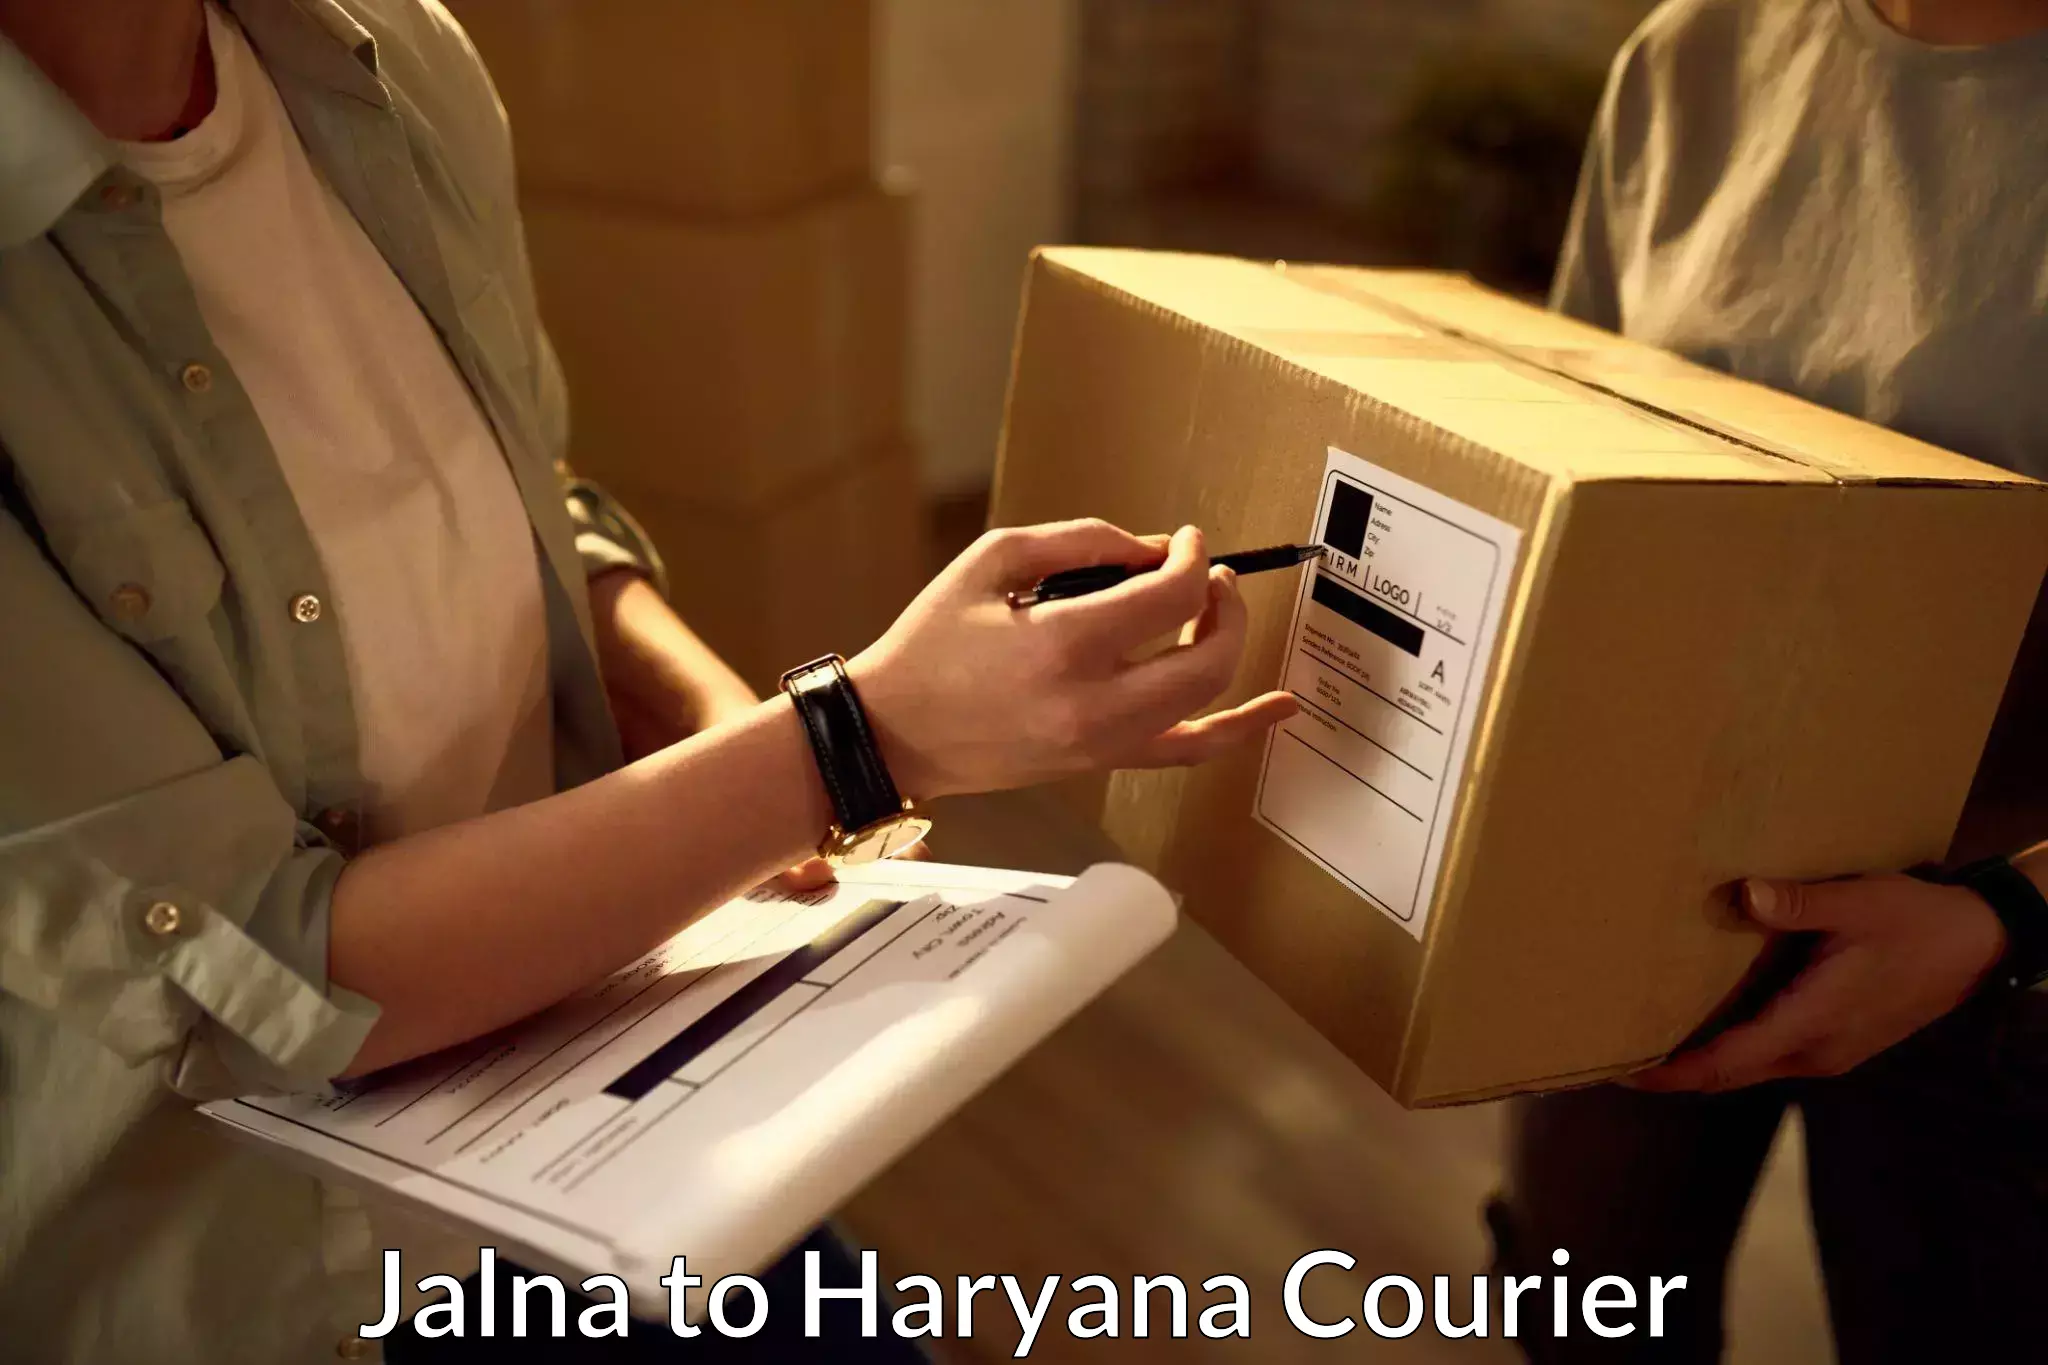 Courier service innovation Jalna to NCR Haryana